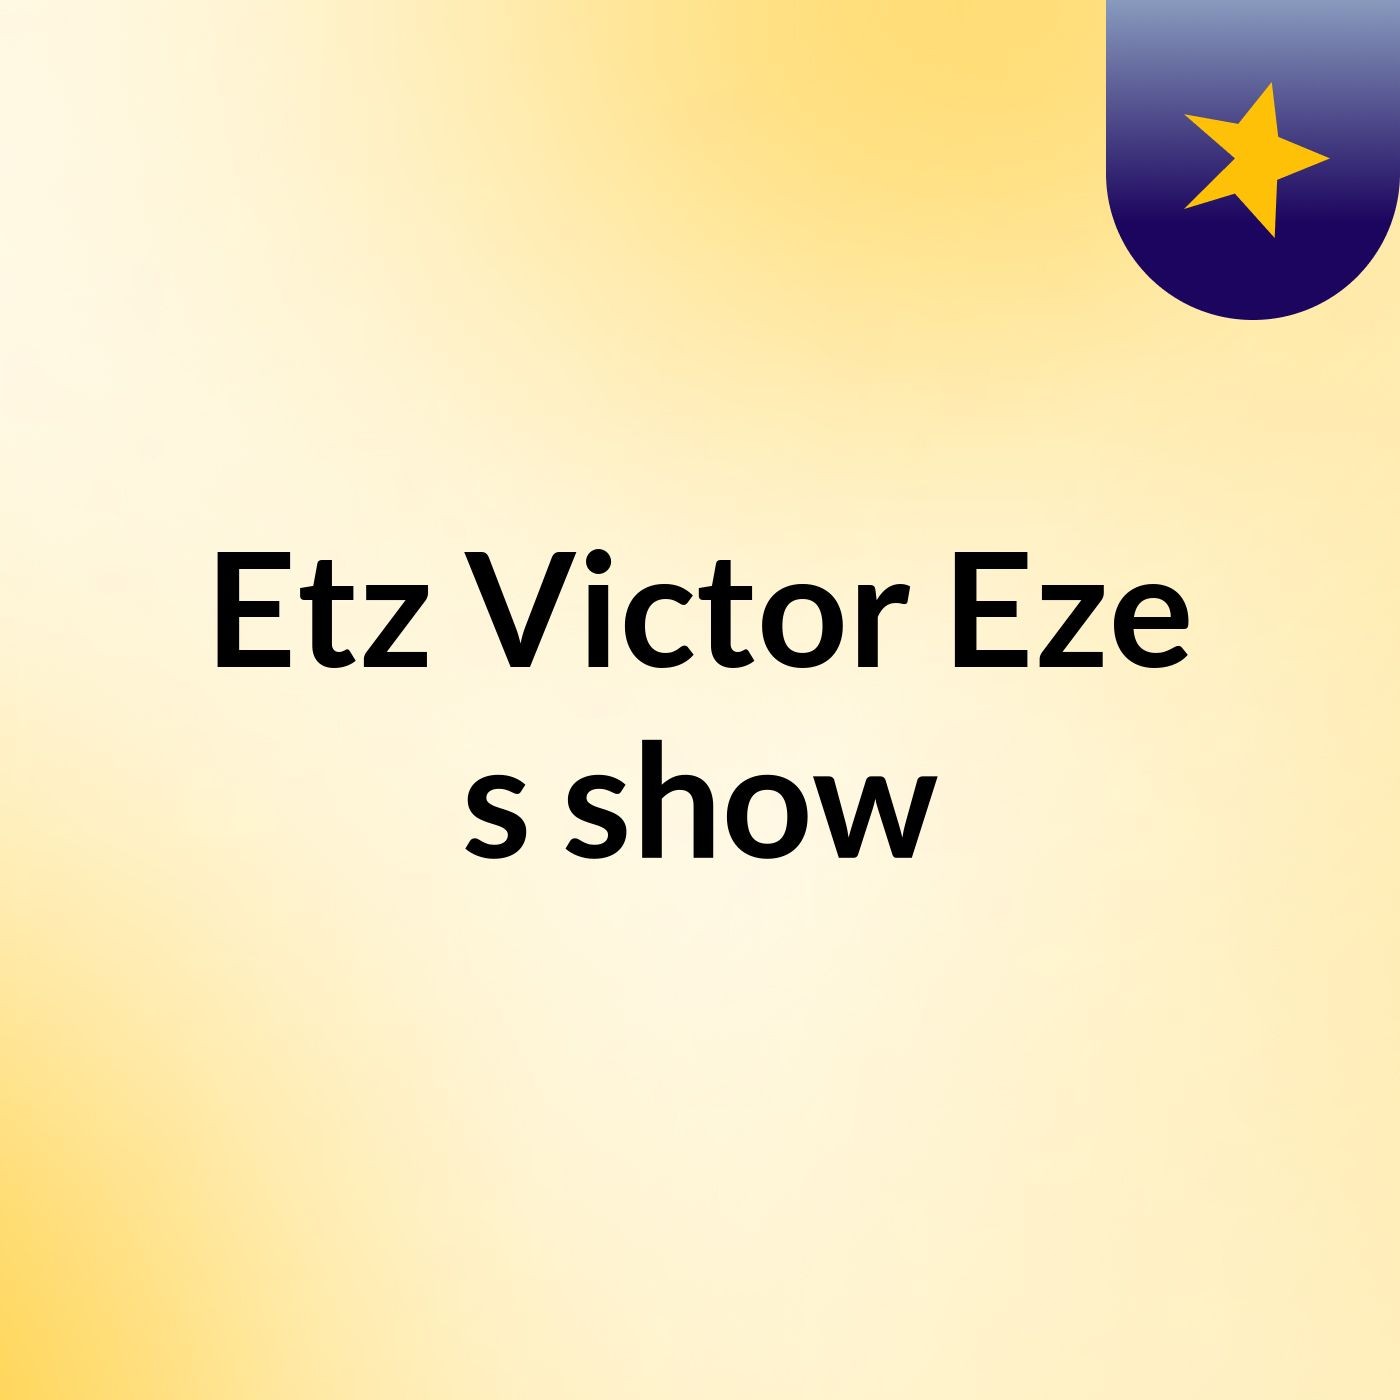 Etz Victor Eze's show